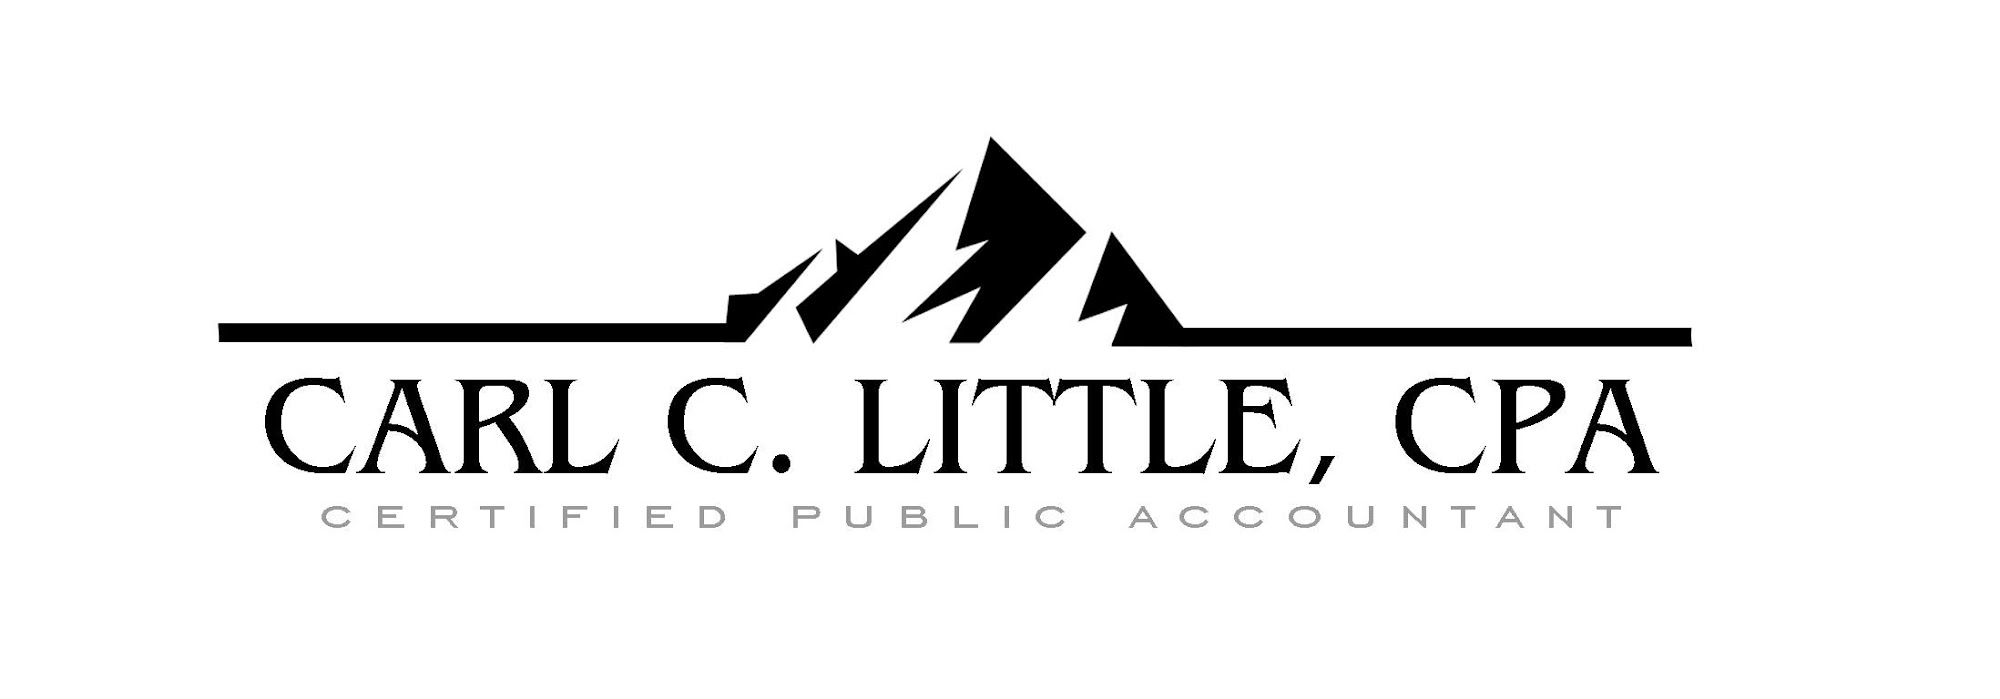 Carl C. Little, CPA 21 Main St STE 1, Jaffrey New Hampshire 03452